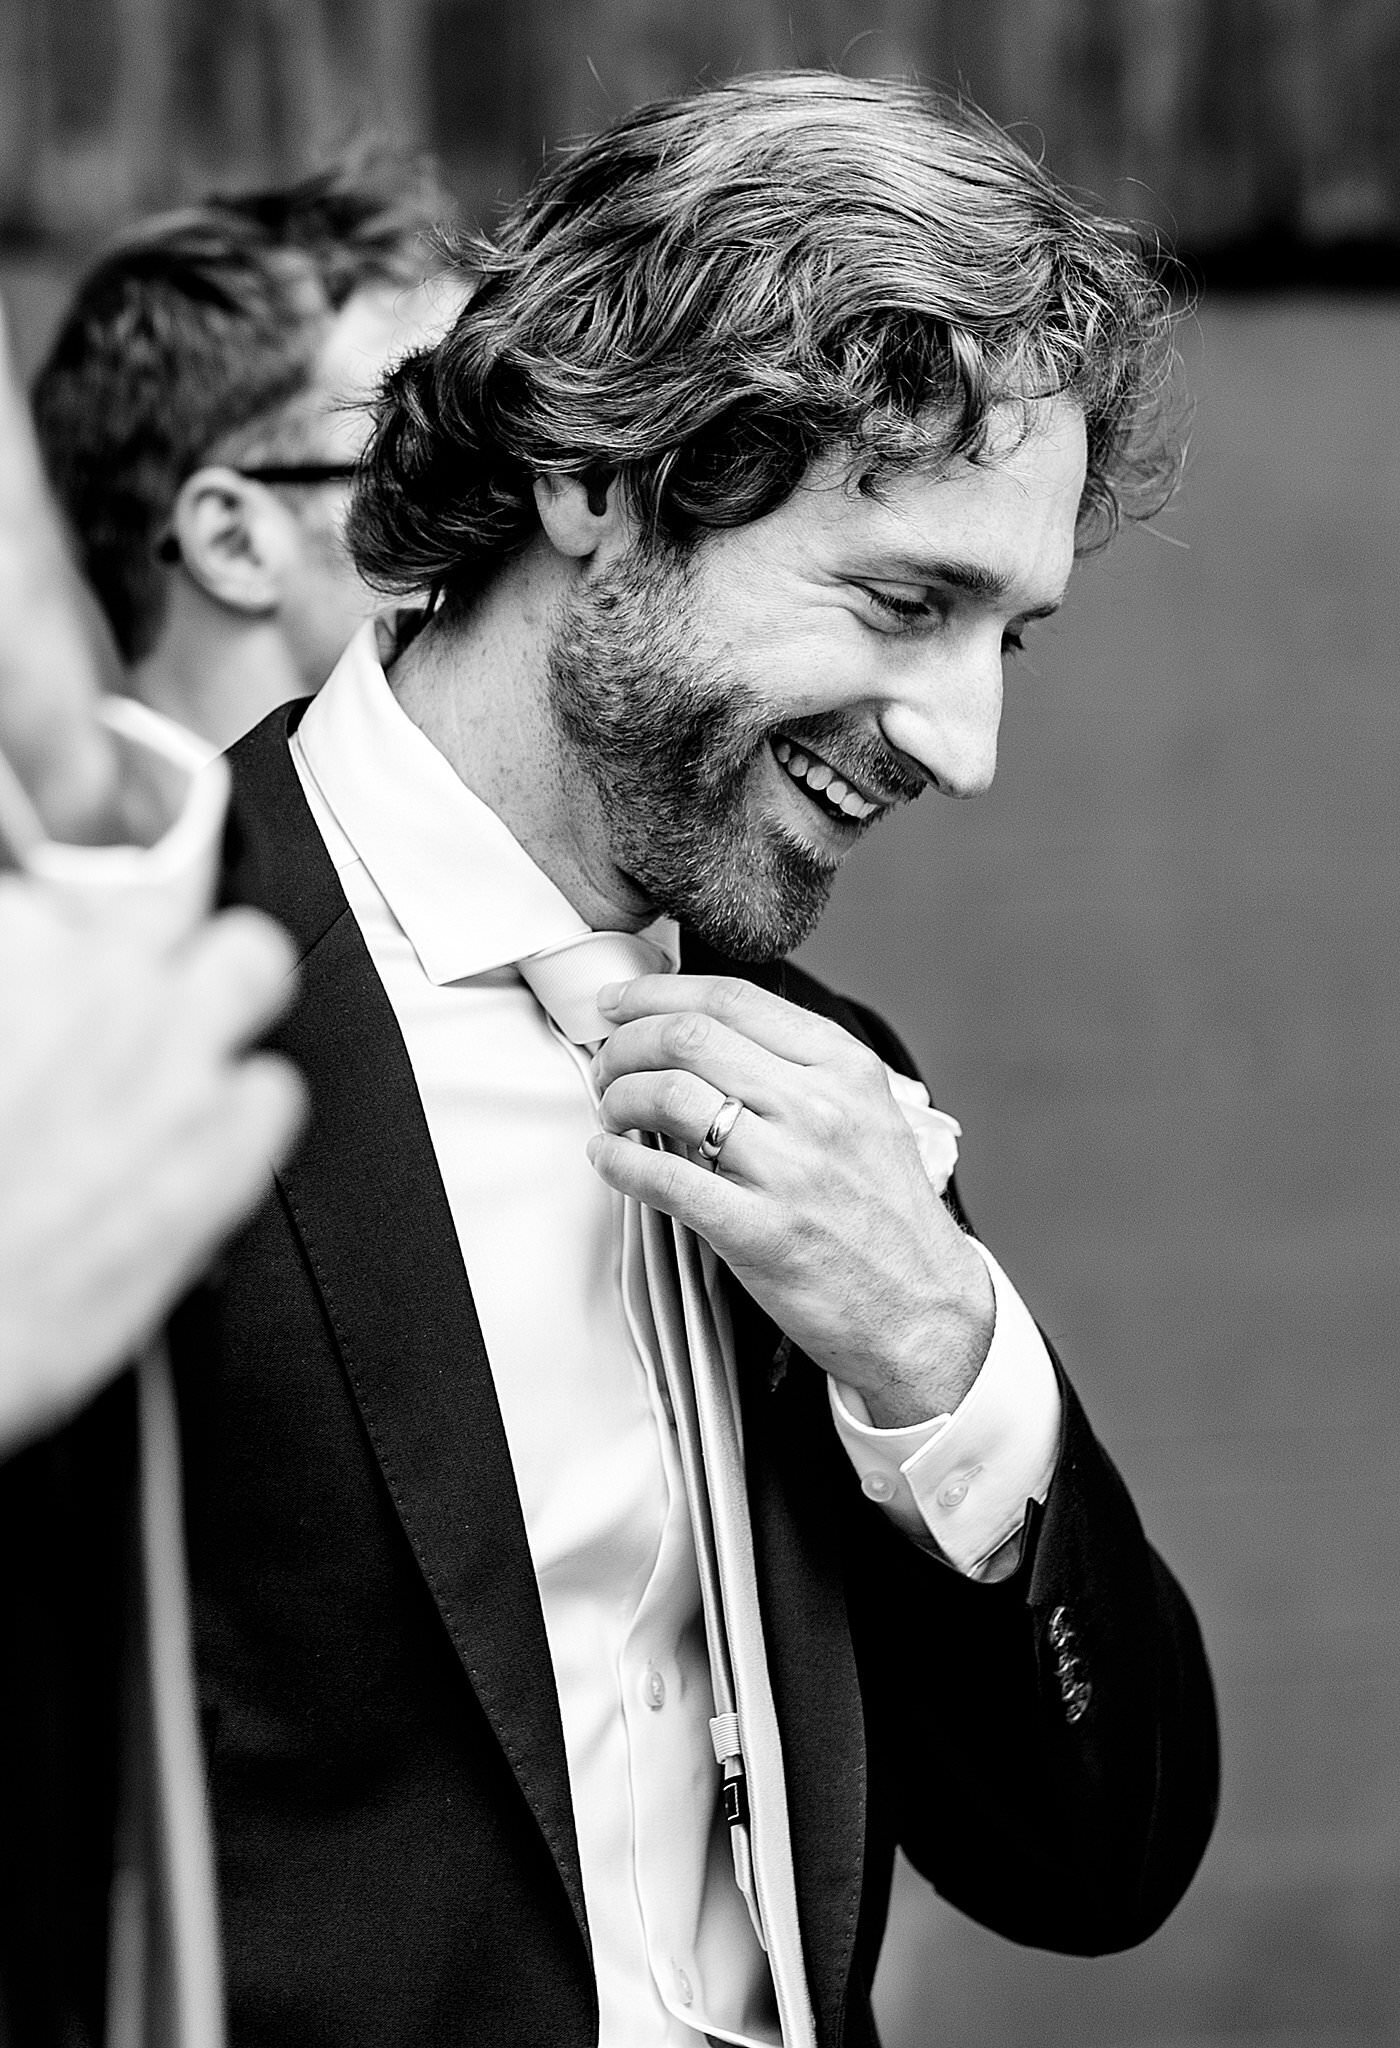 Black and white photo of groom adjusting his tie